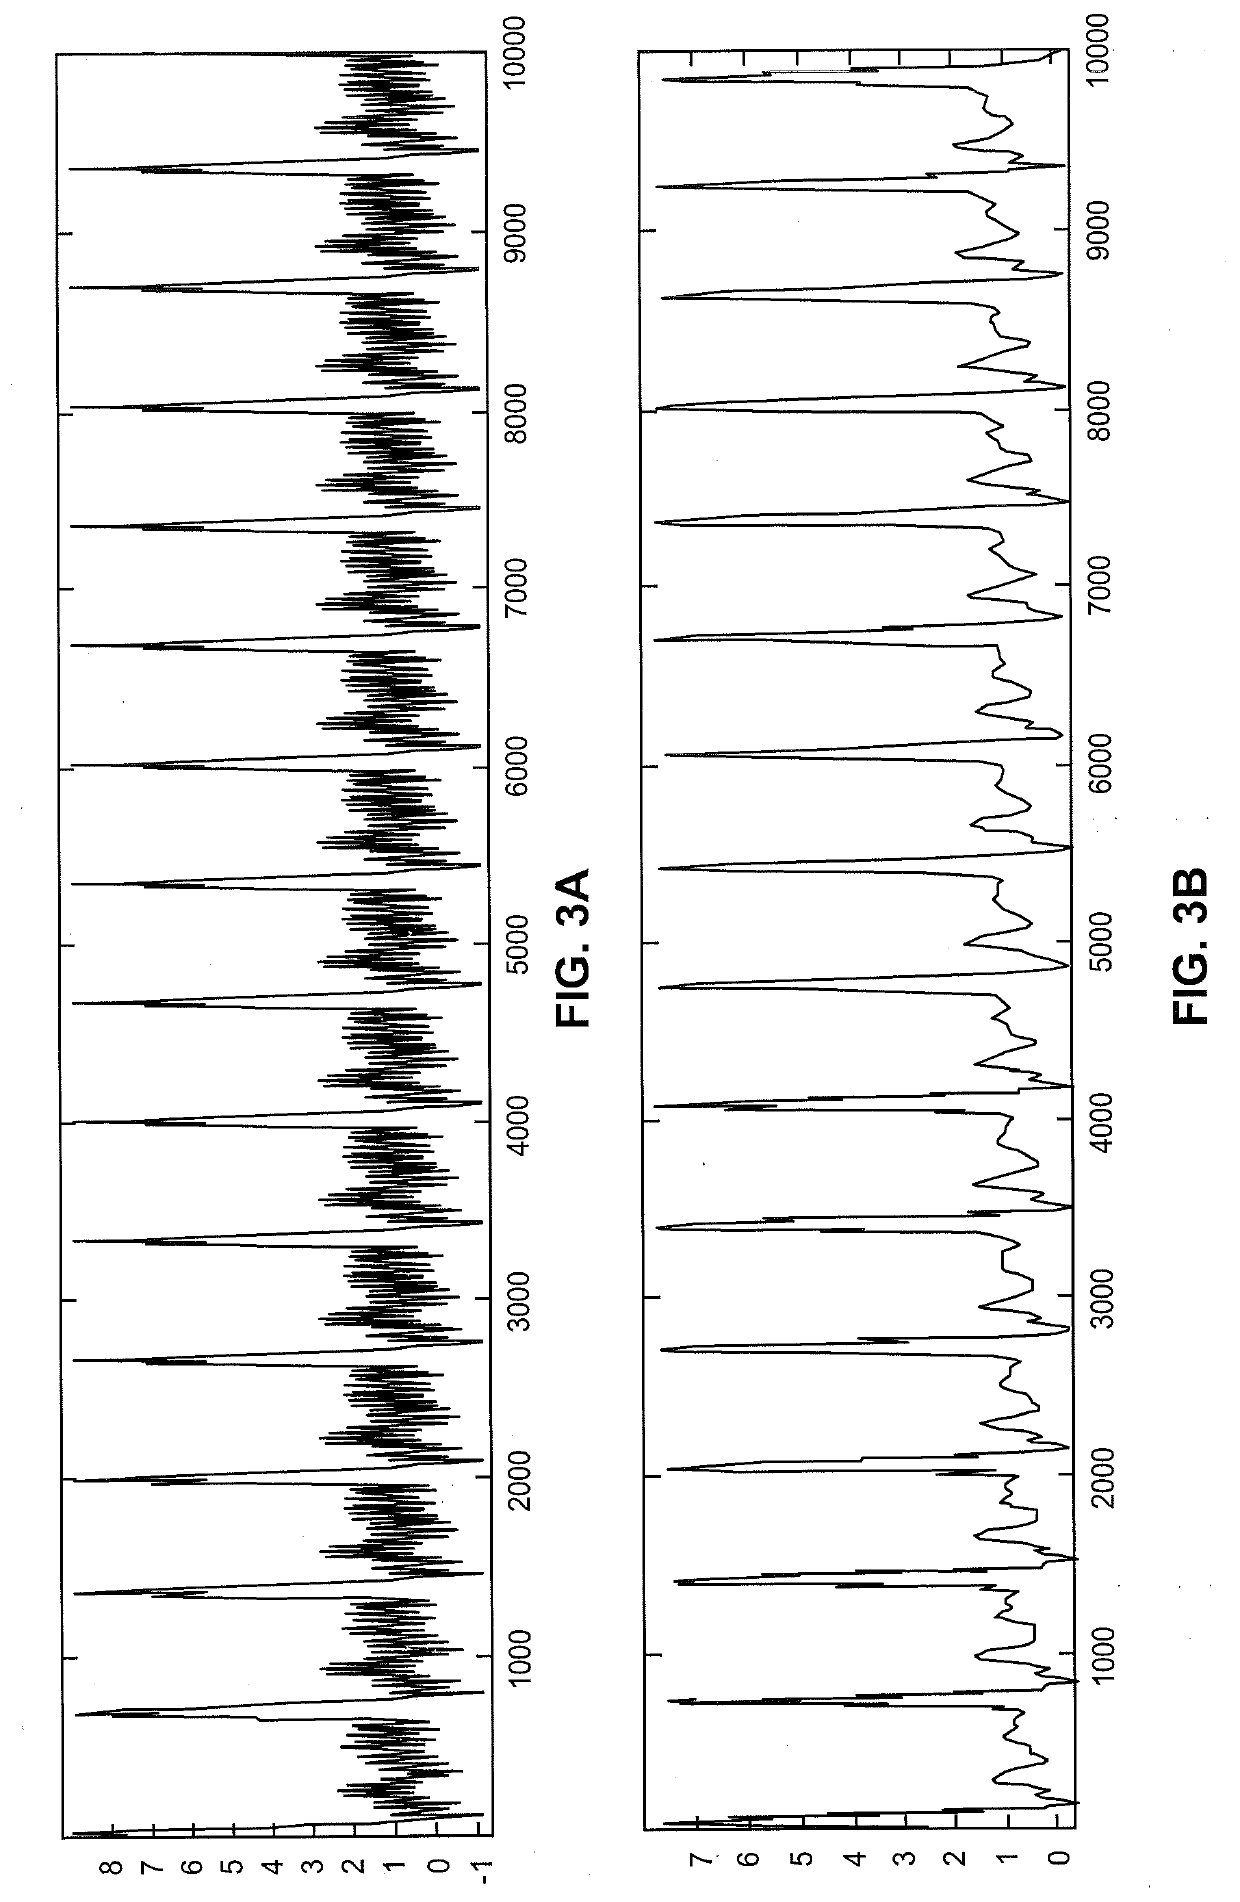 Estimation of peripheral vascular resistance using a miniature piezoelectric sensor